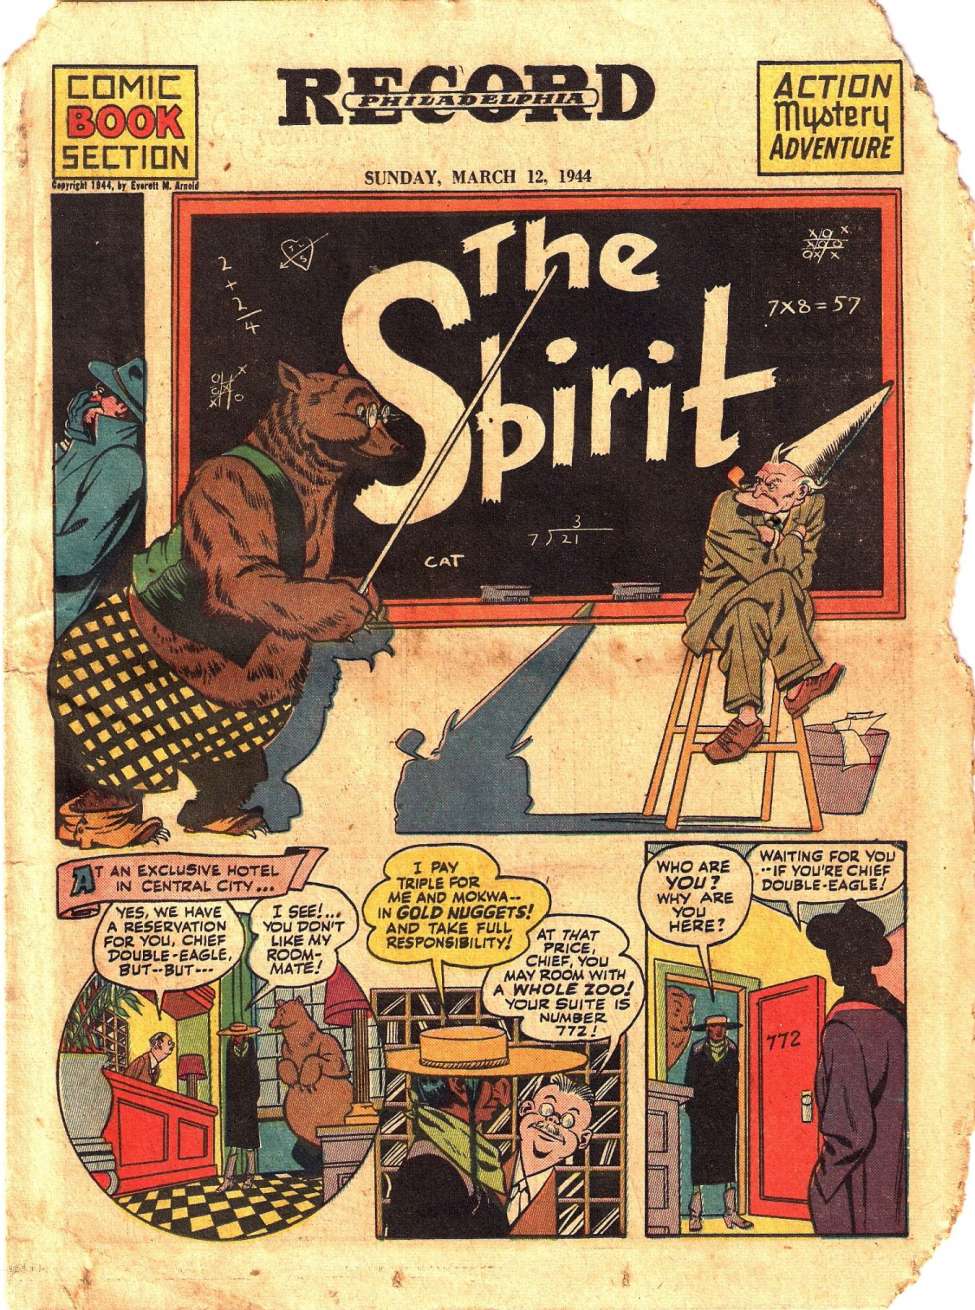 Comic Book Cover For The Spirit (1944-03-12) - Philadelphia Record